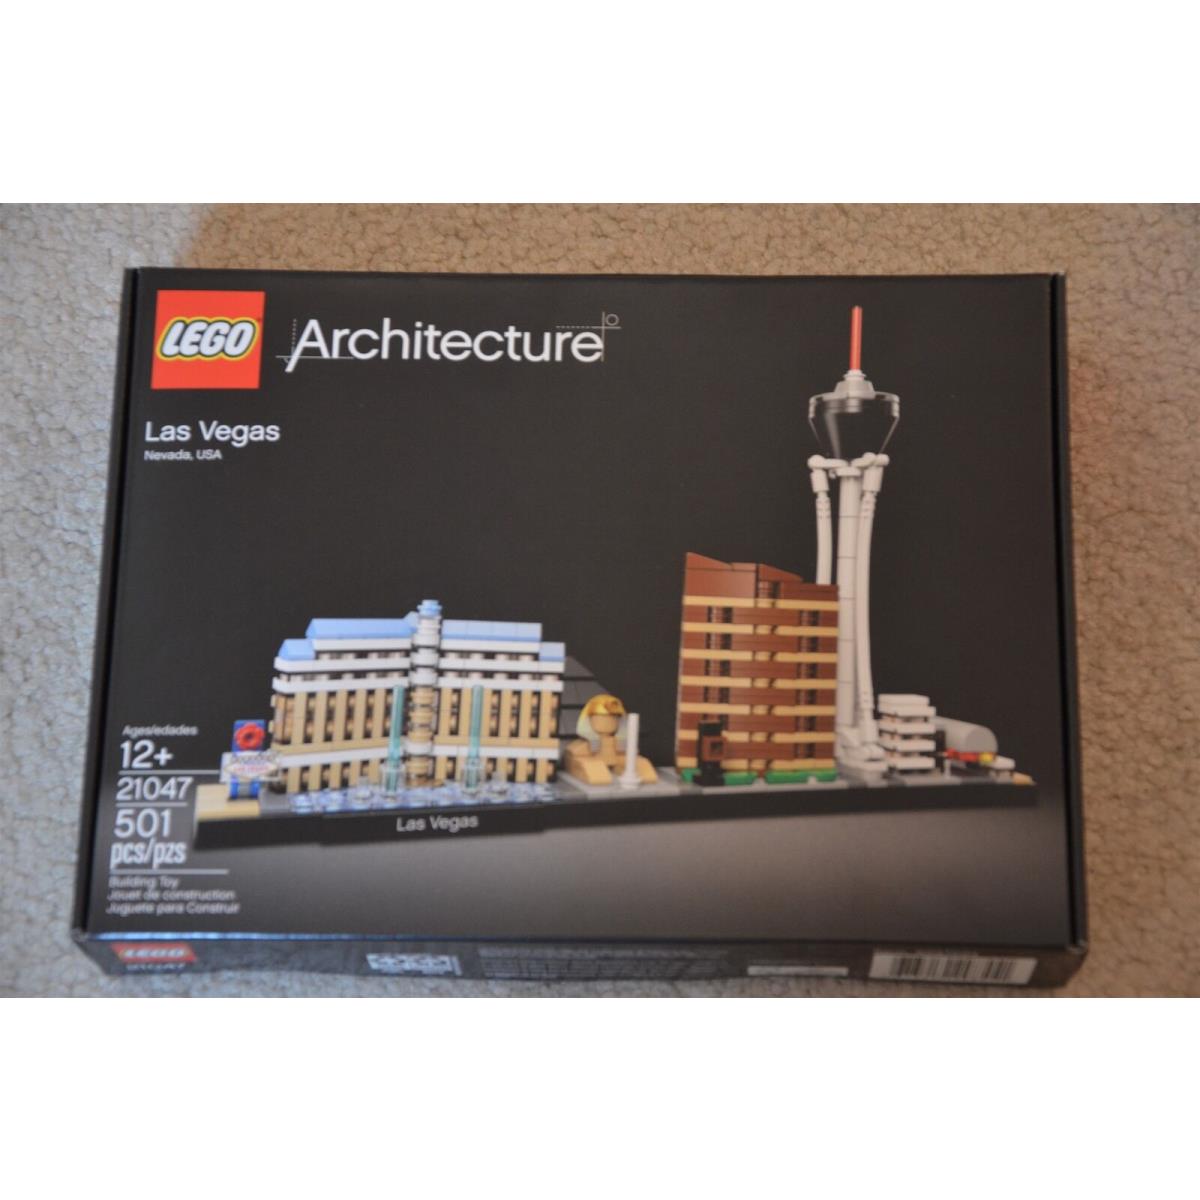 Lego 21047 Architecture Las Vegas Set